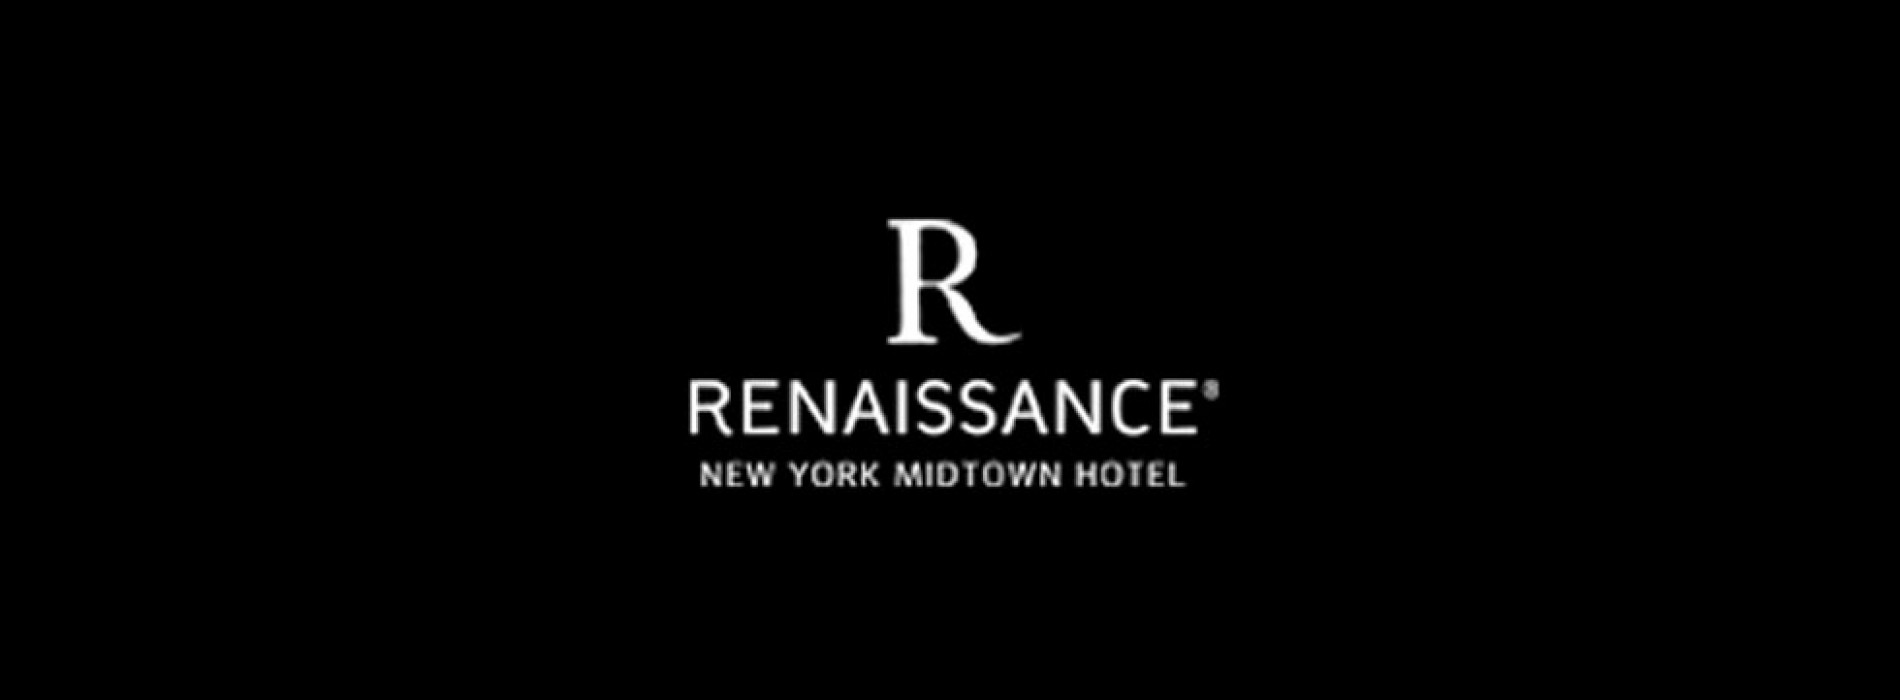 Renaissance New York Midtown Hotel set to open